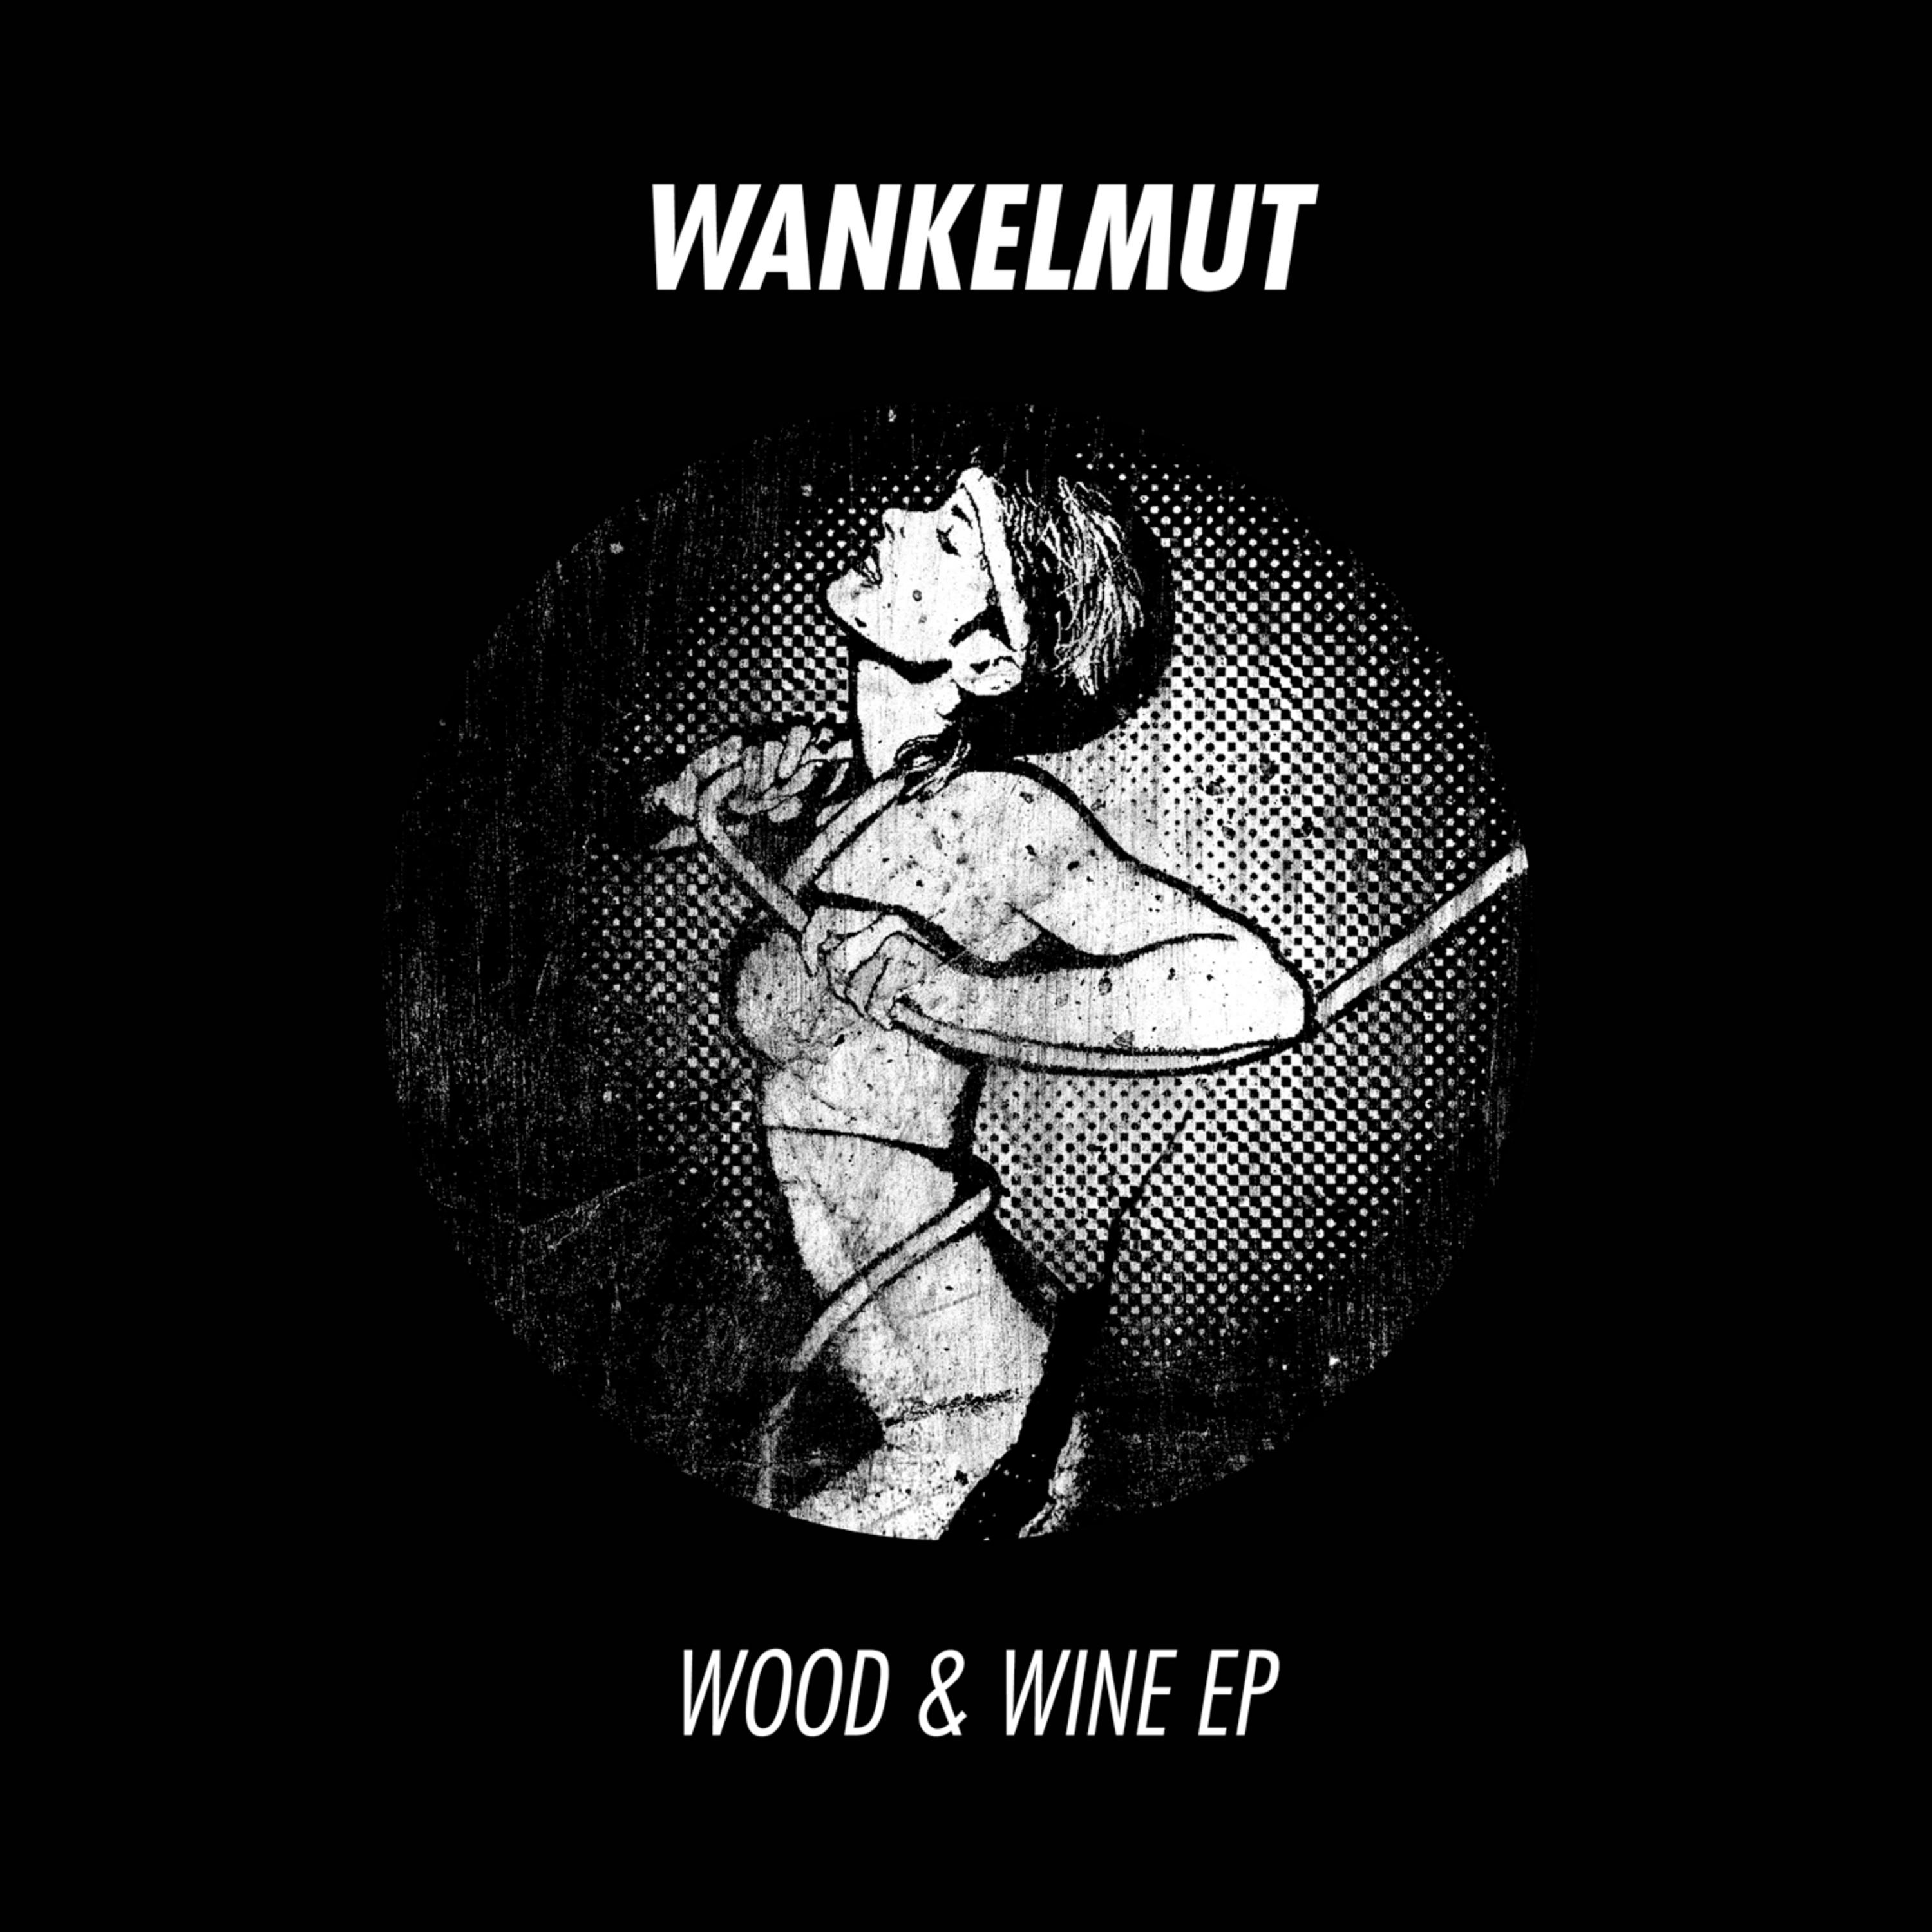 Wood & Wine EP